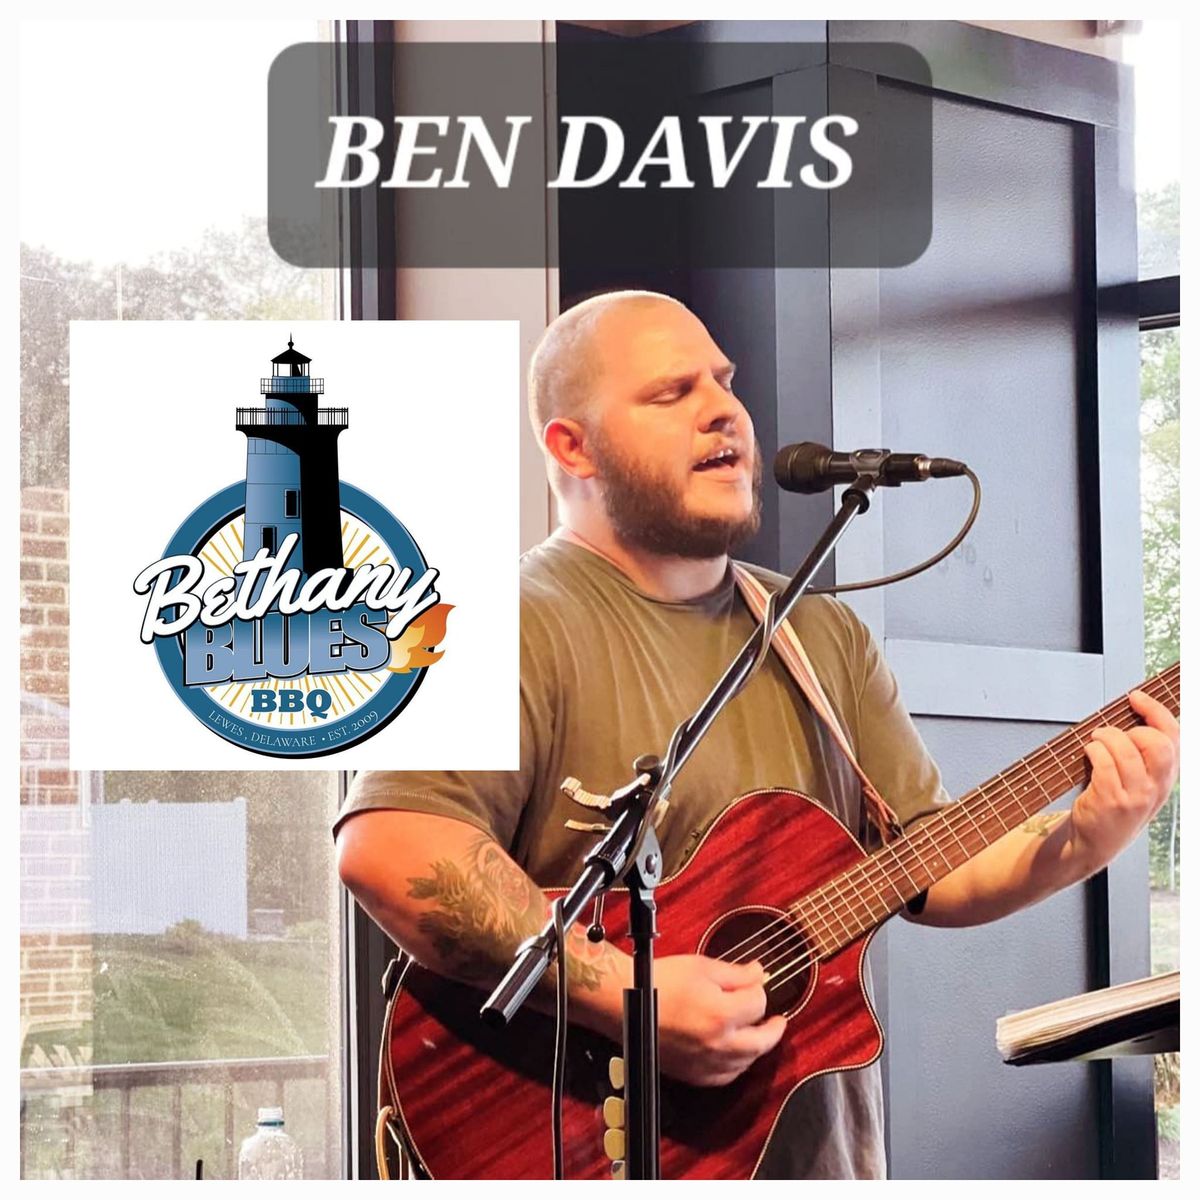 Ben Davis @Bethany Blues of Lewes 